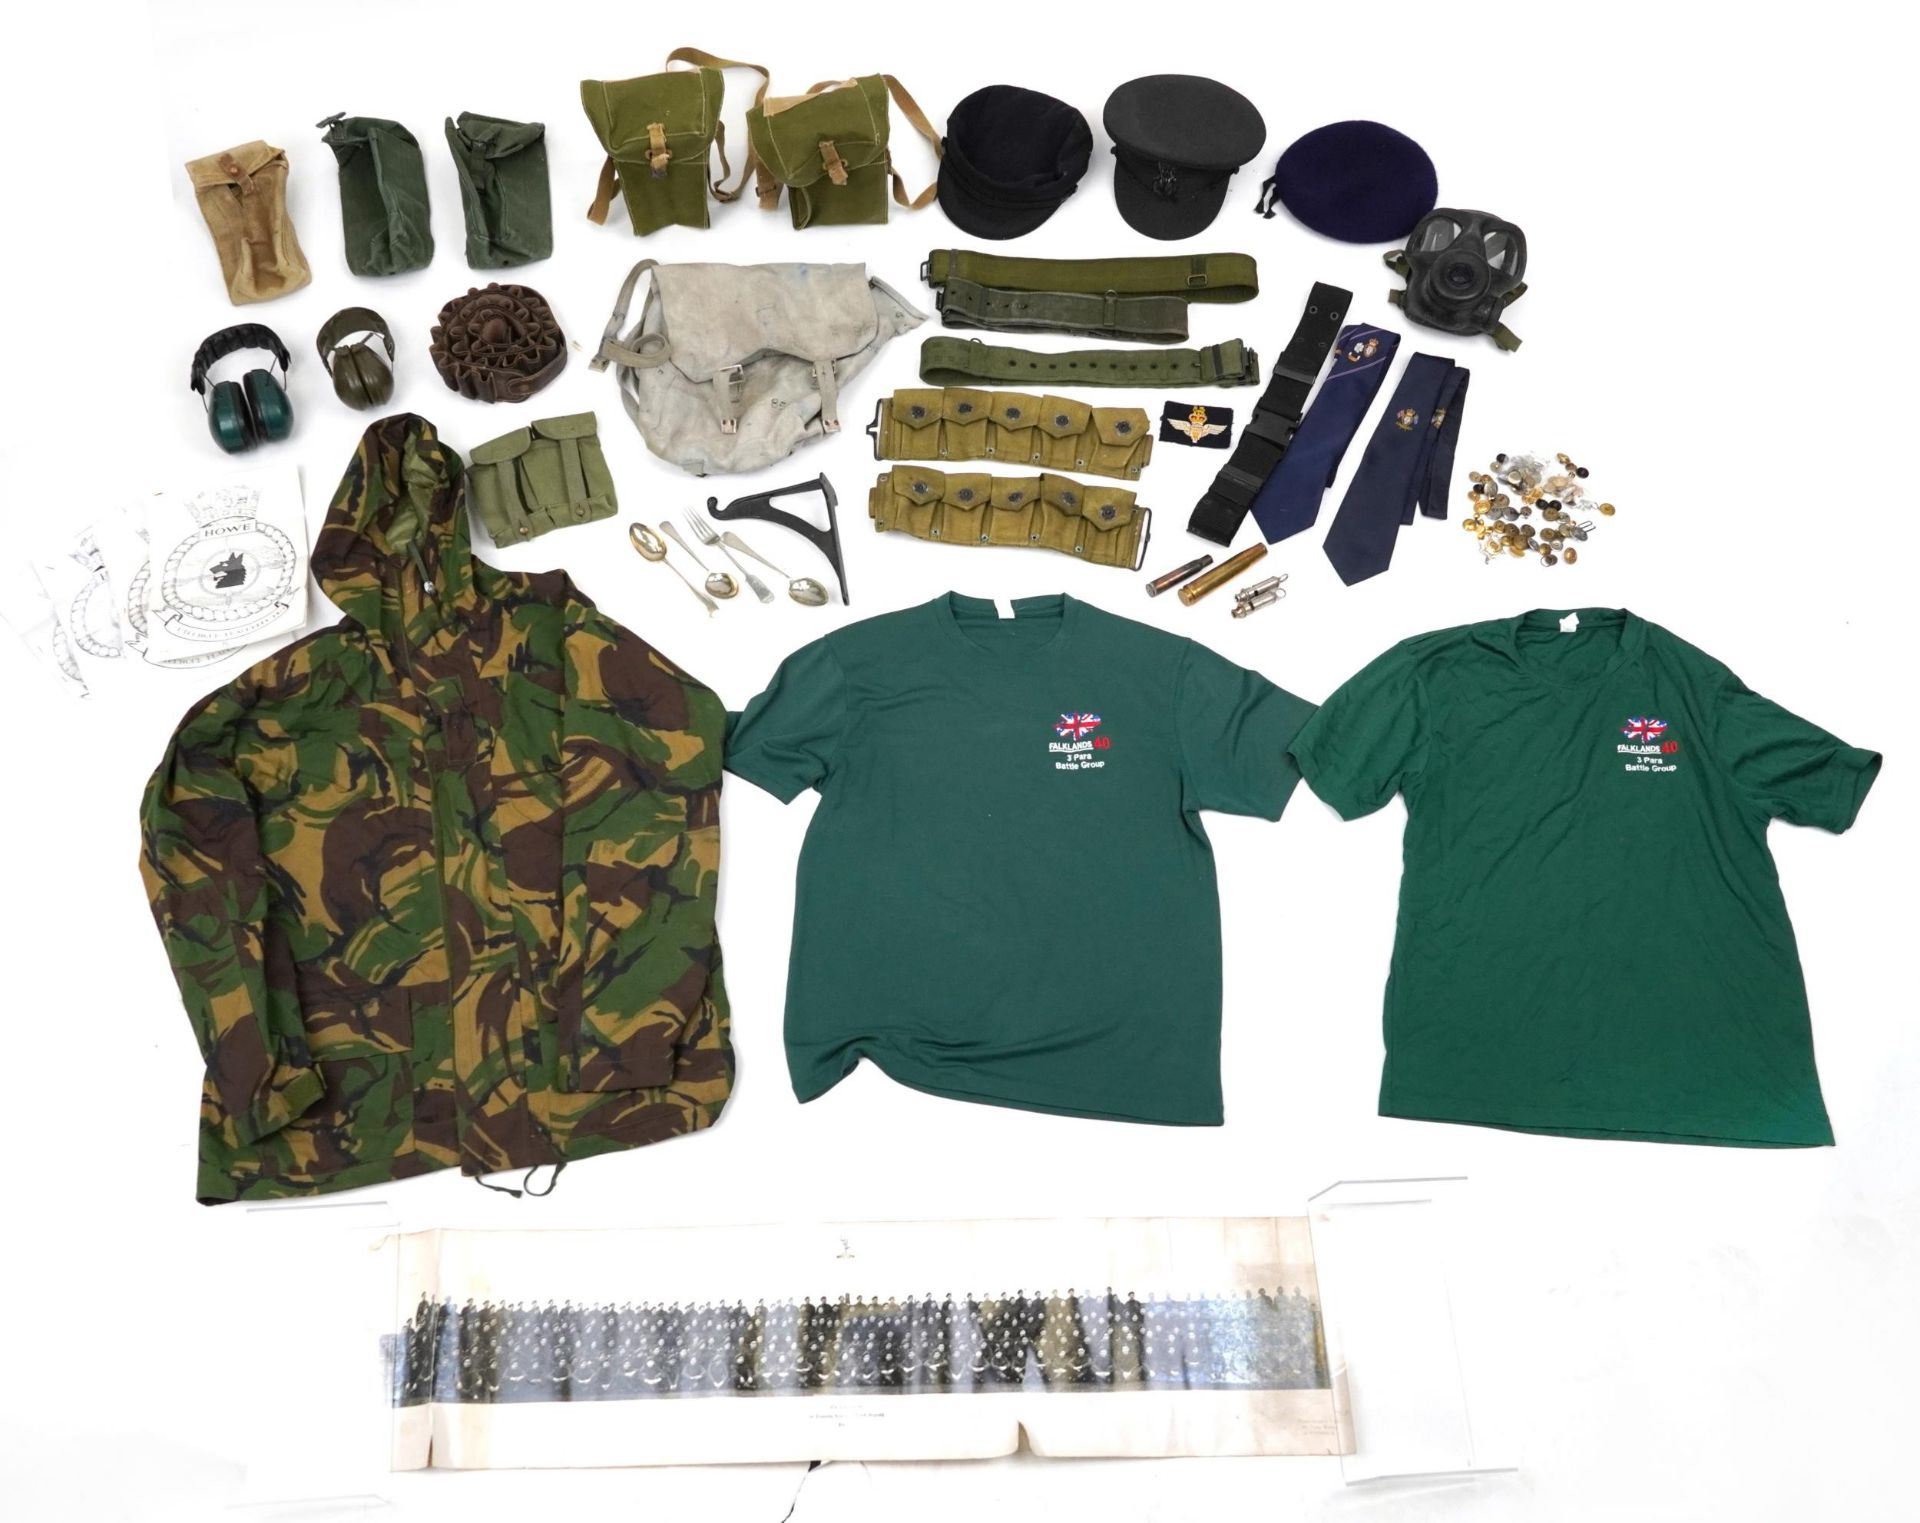 Militaria including Royal Navy peaked cap, Falkland Islands commemorative tee shirts, gas mask and